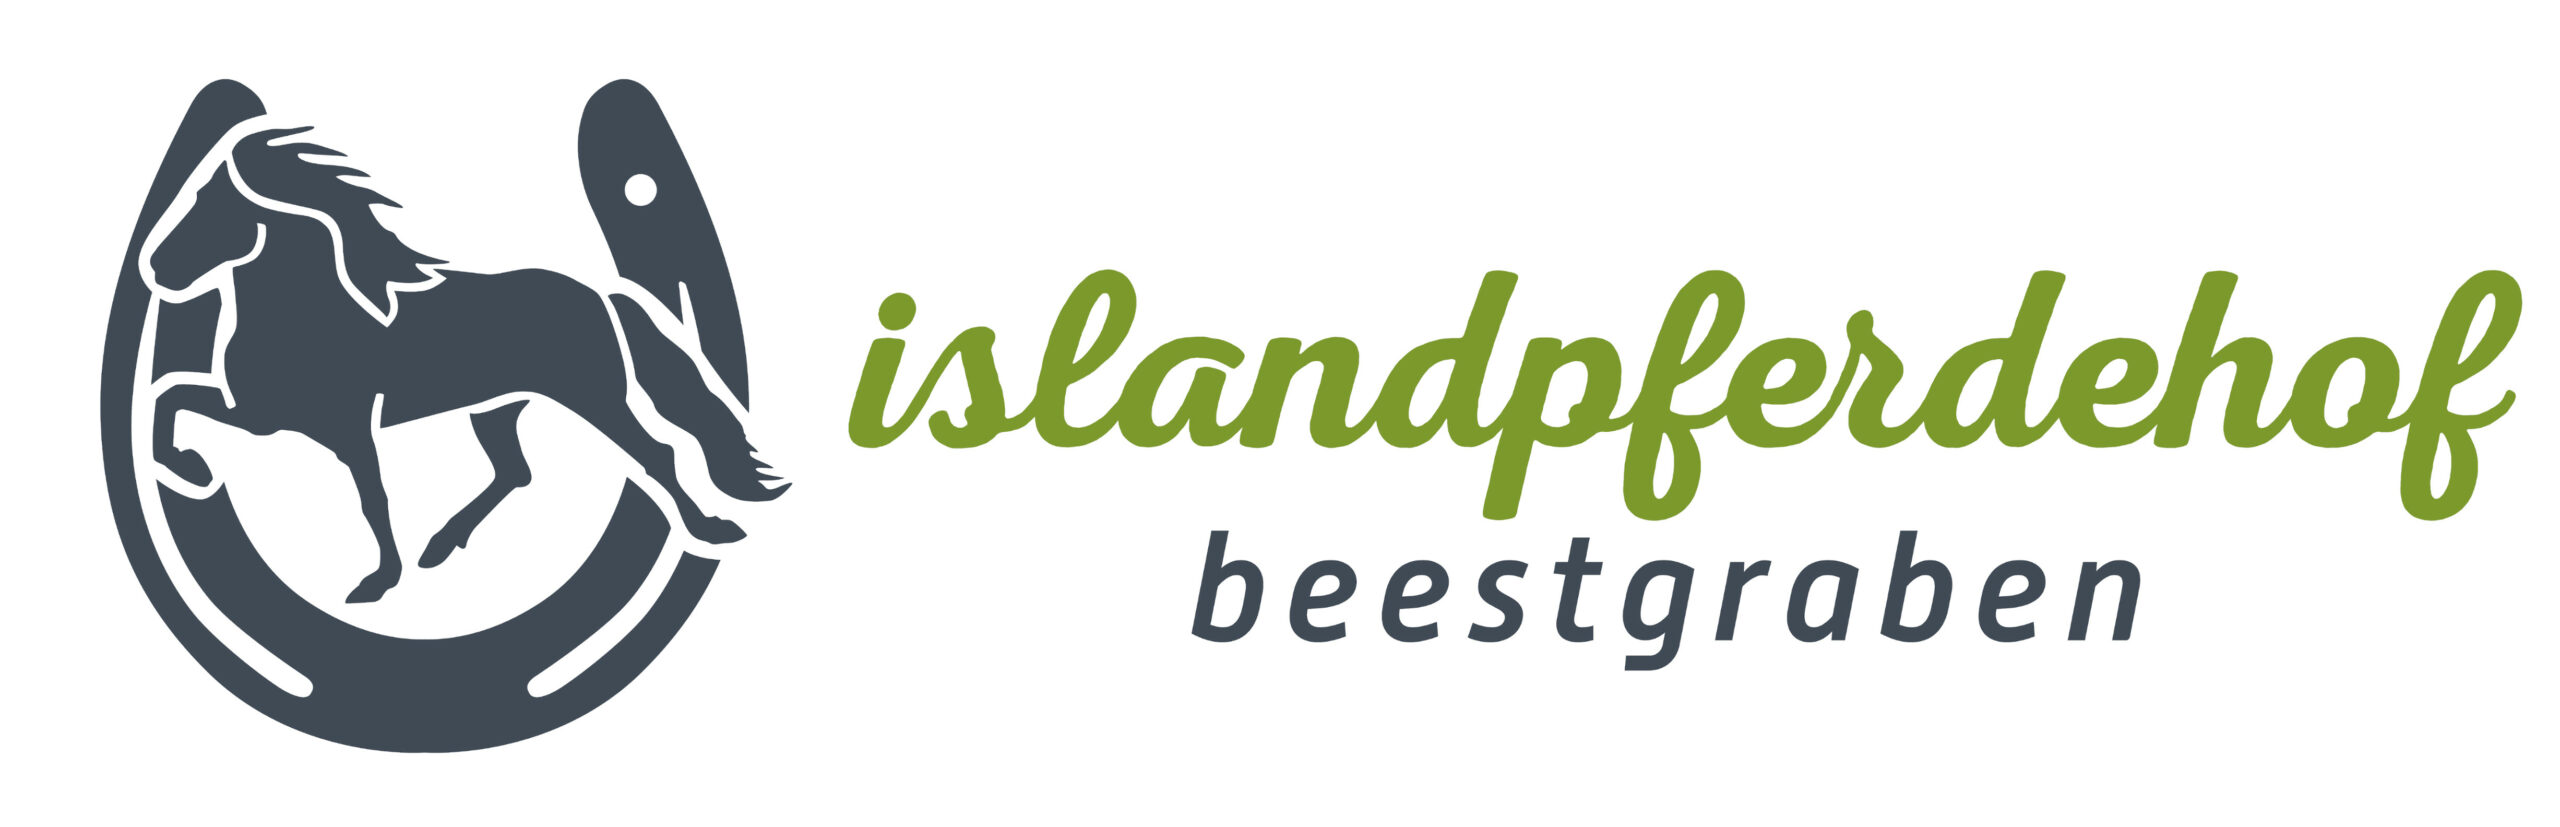 beestgraben - Islandpferdehof